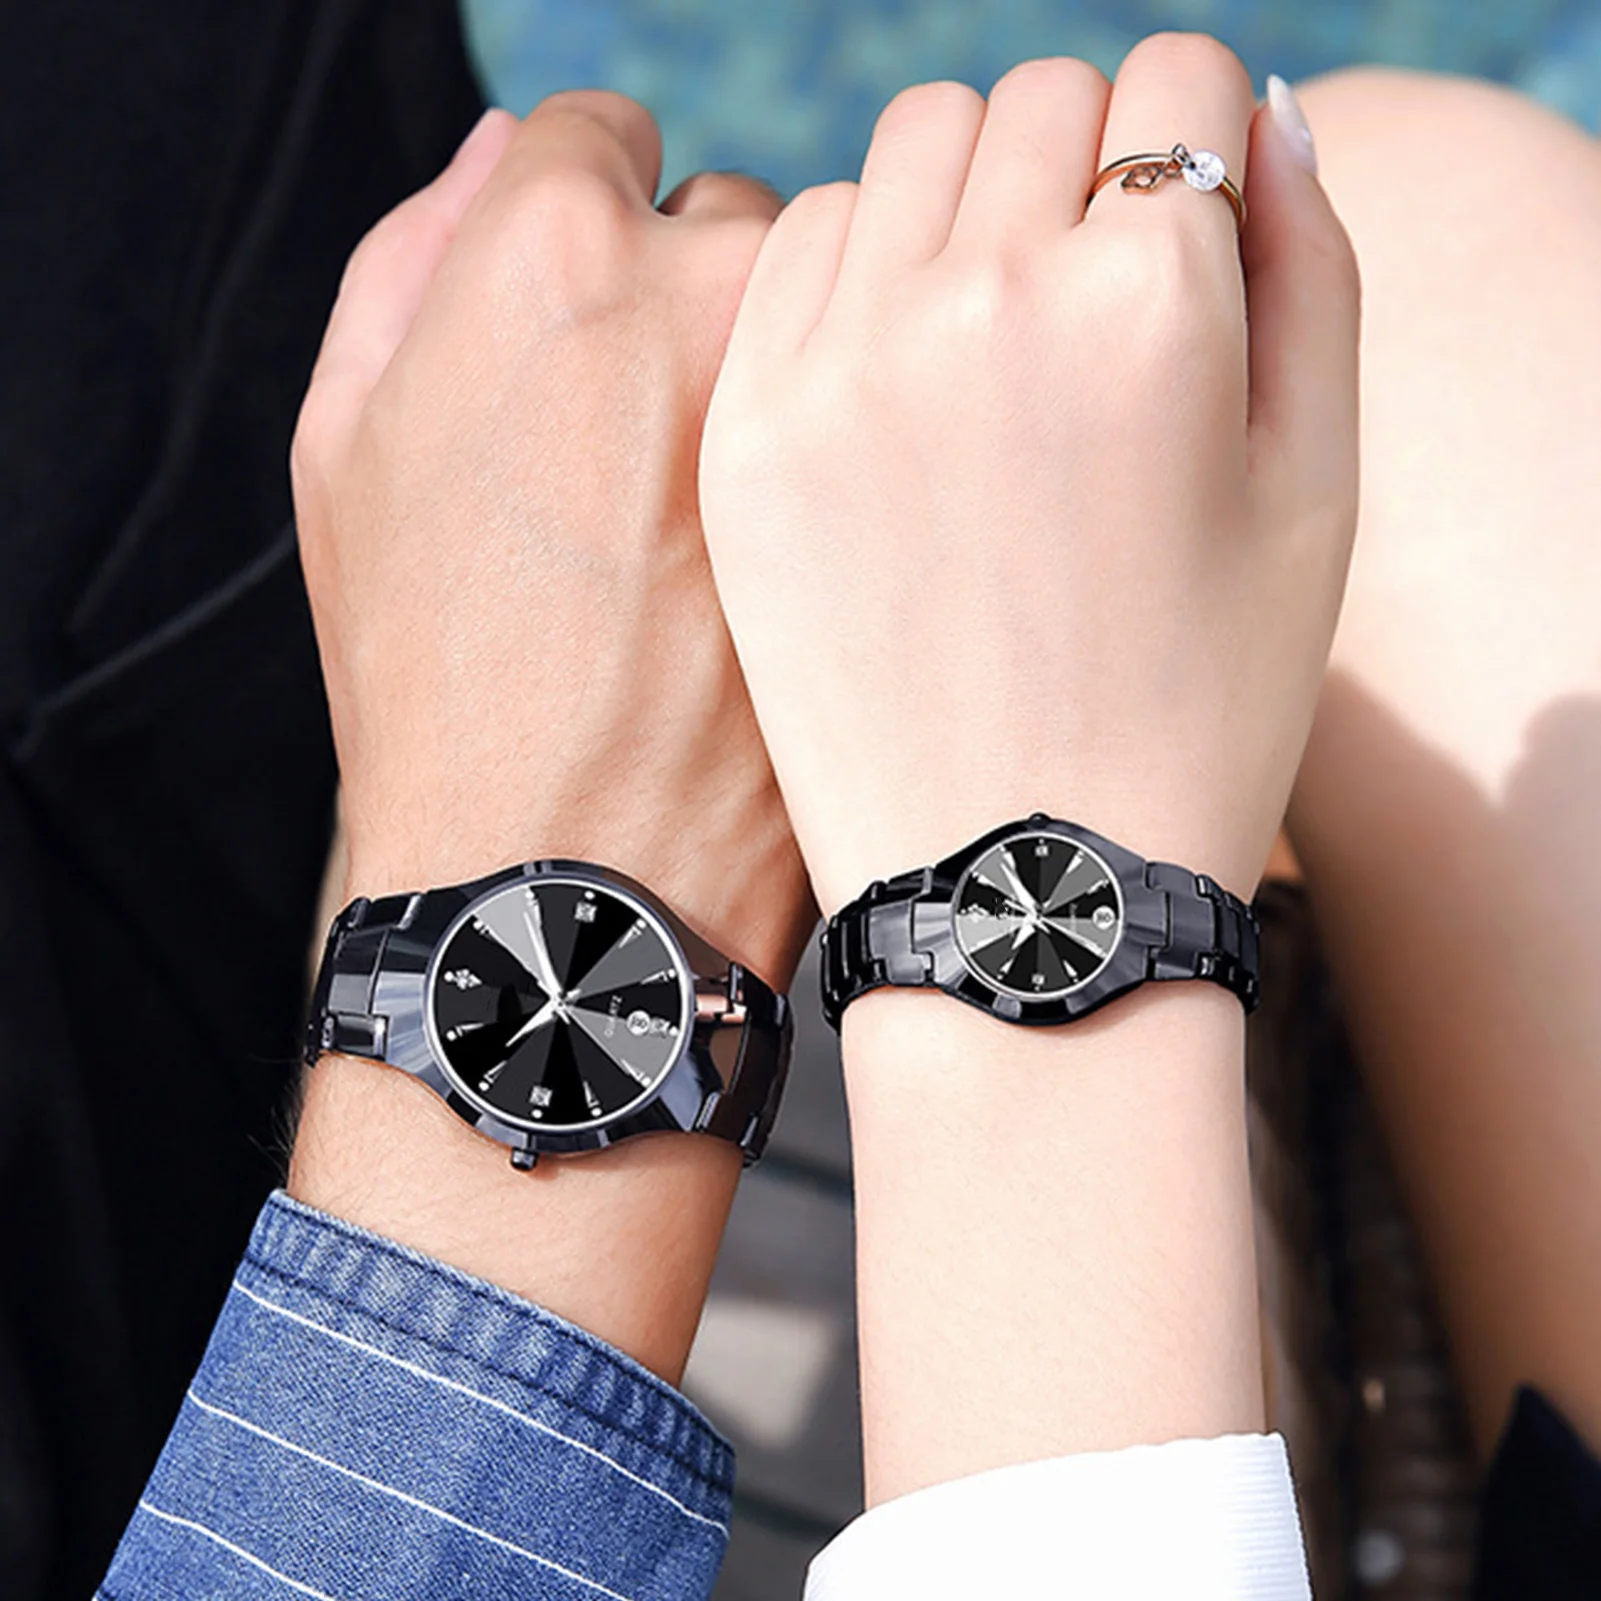 

Female Male Stainless Steel Watch Waterproof Black & Silver Black Analog Wrist Watch for Women Men Decor Every Day Wearing AIC88